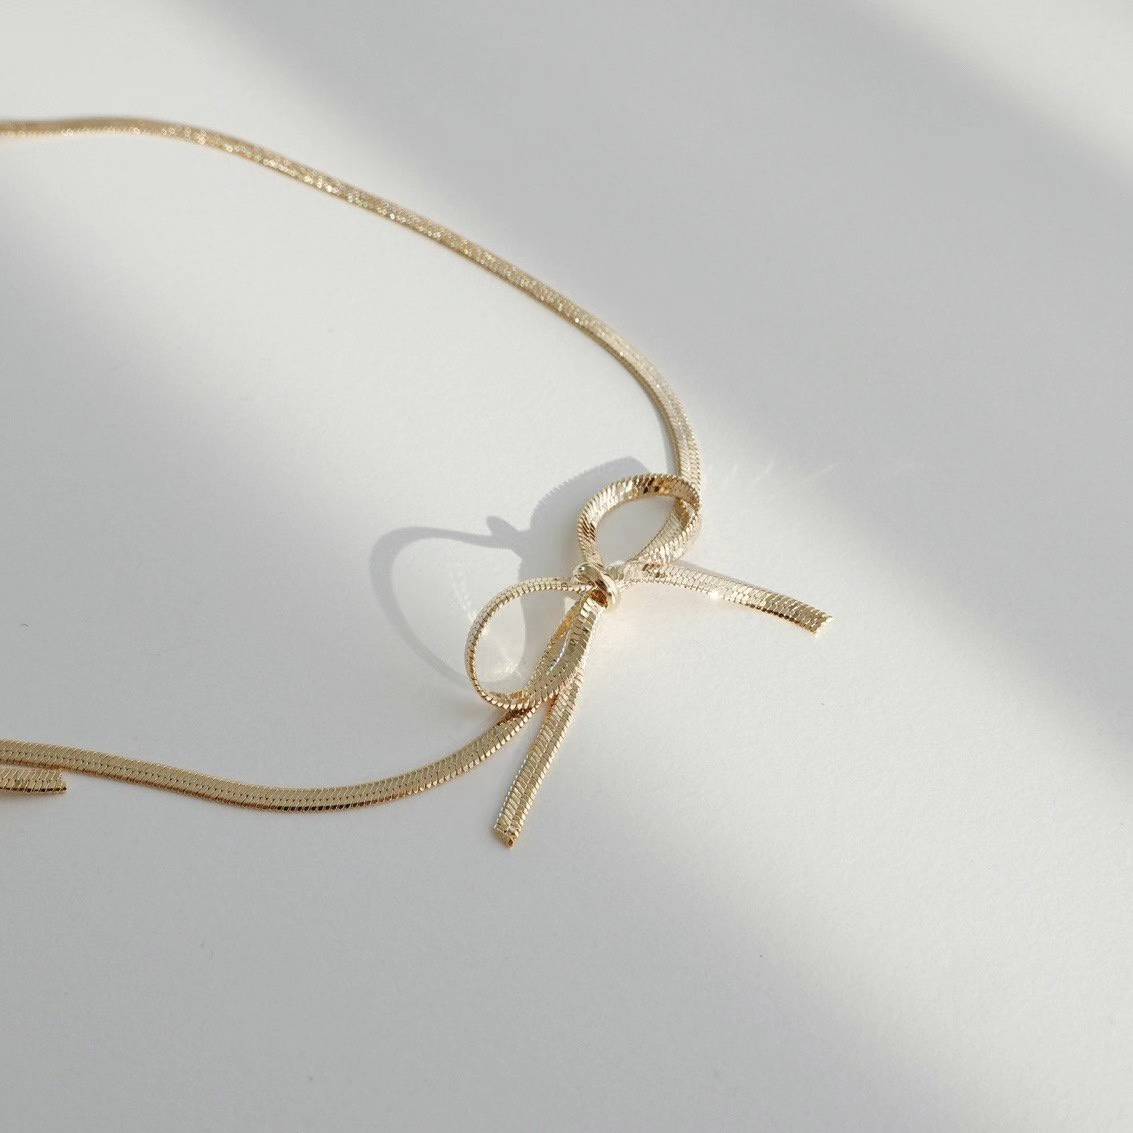 Bartha segmented bows necklace